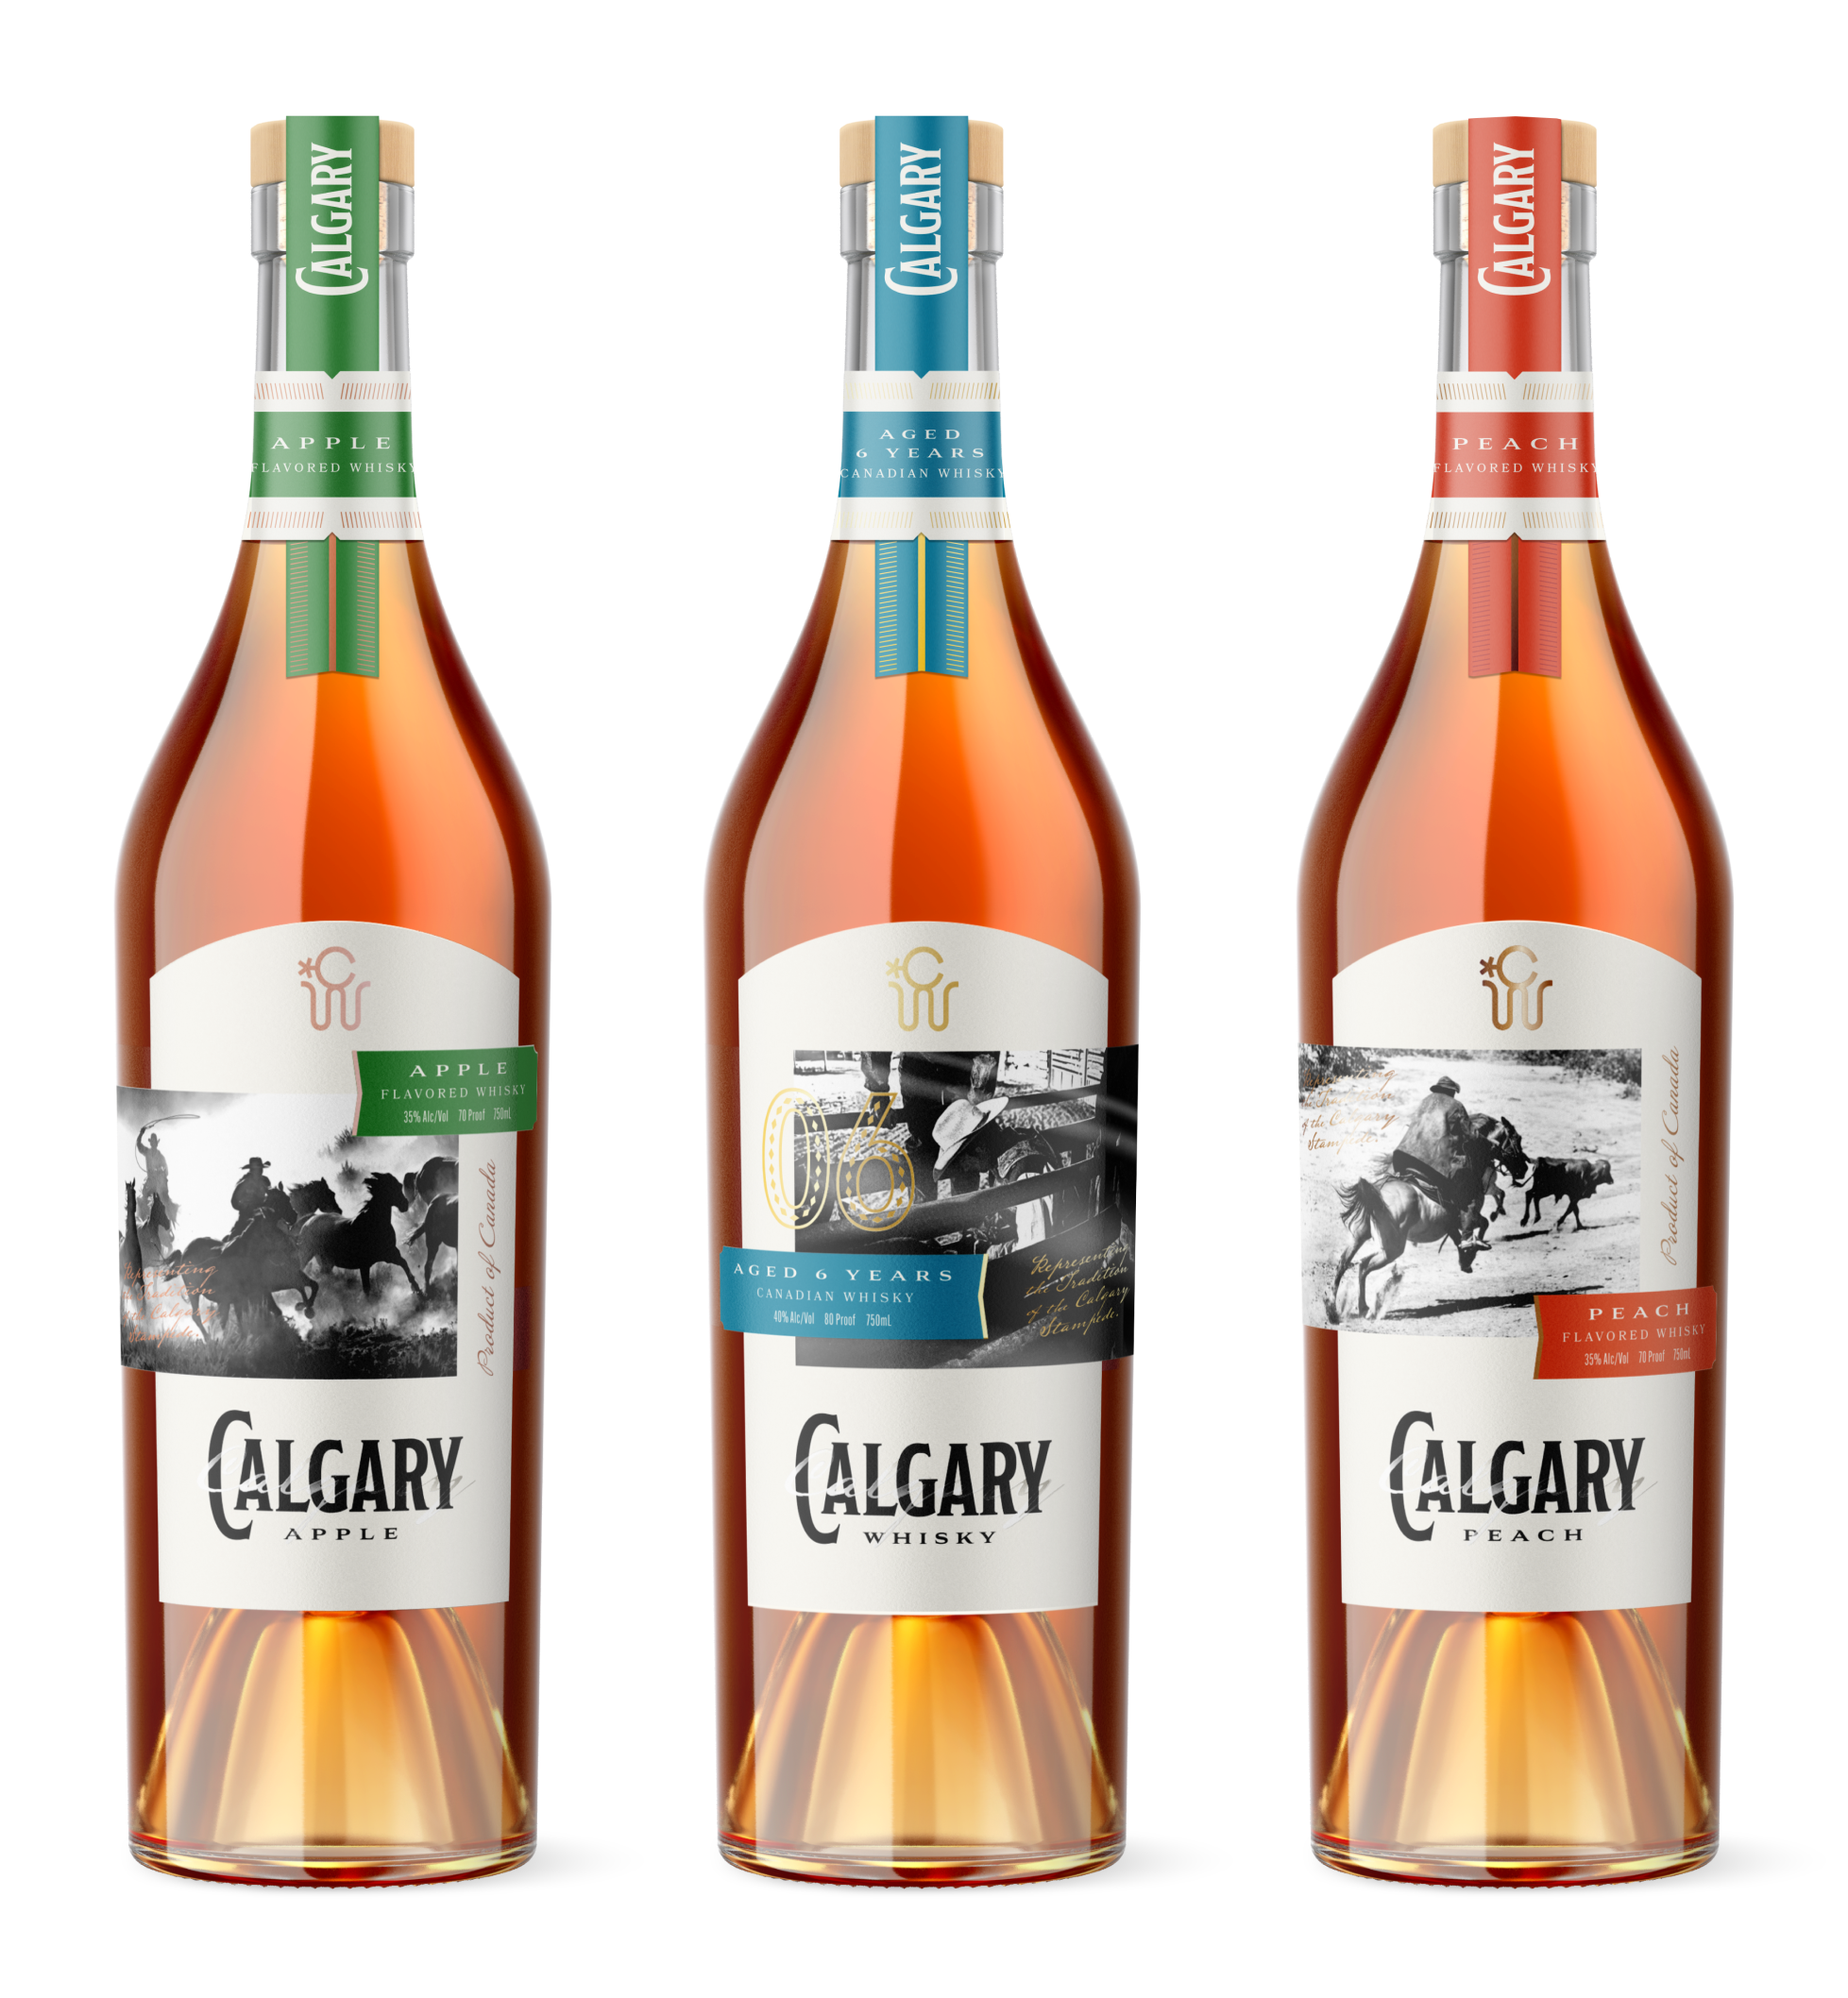 Calgary Whisky, Calgary Apple, Calgary Peach